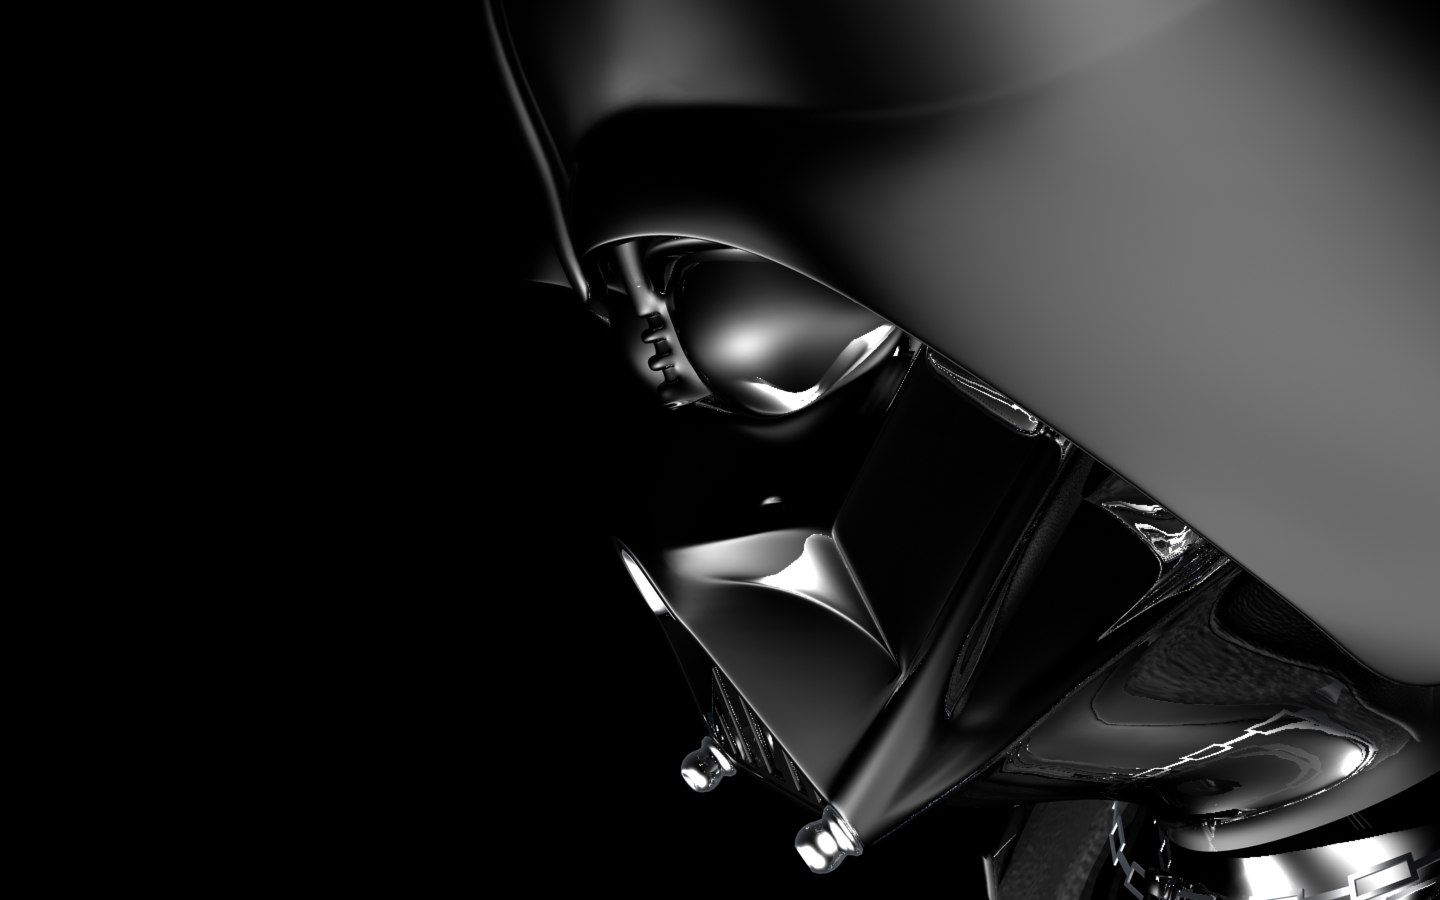 Free 'Star Wars' Darth Vader Desktop Wallpaper [Star Wars] Geek Twins